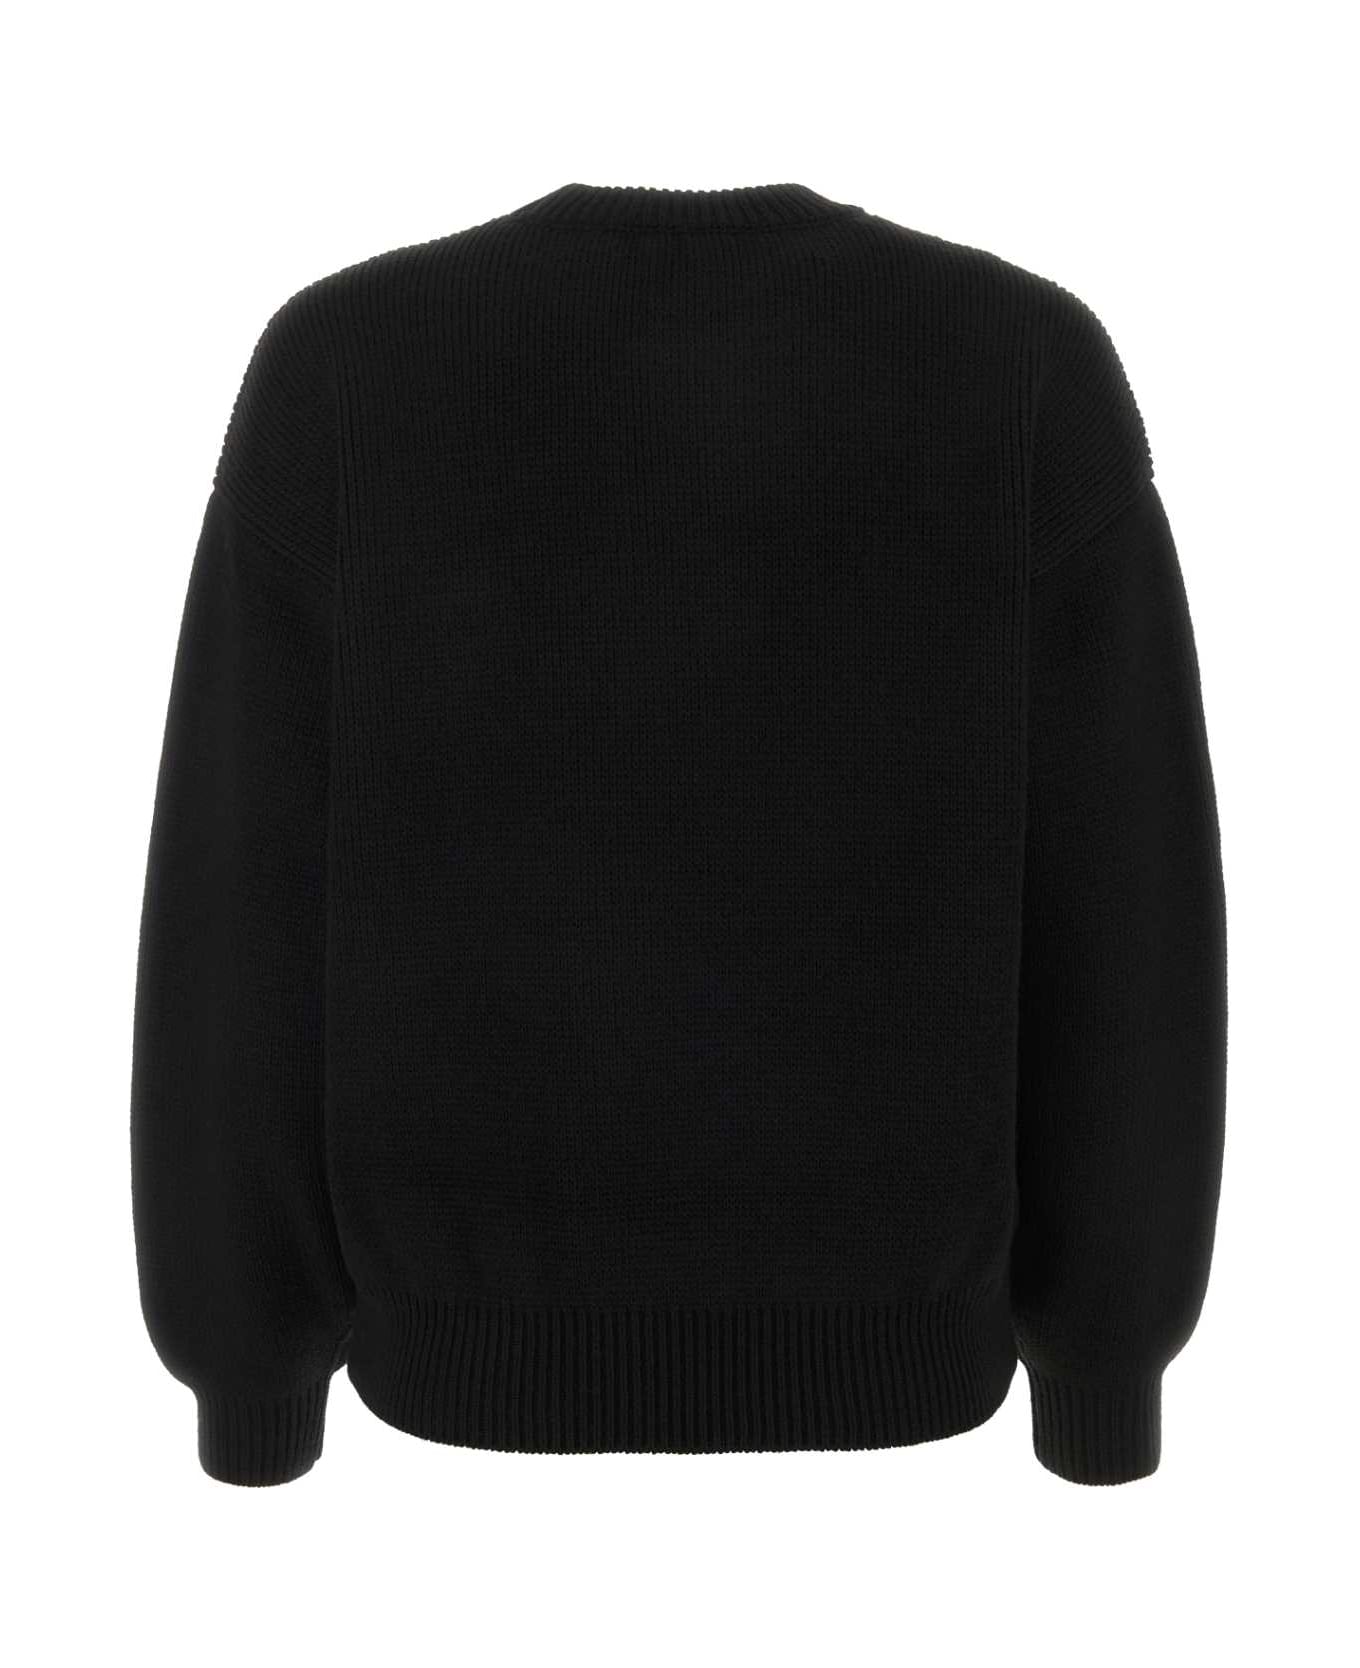 T by Alexander Wang Black Acrylic Blend Sweater - BLACK